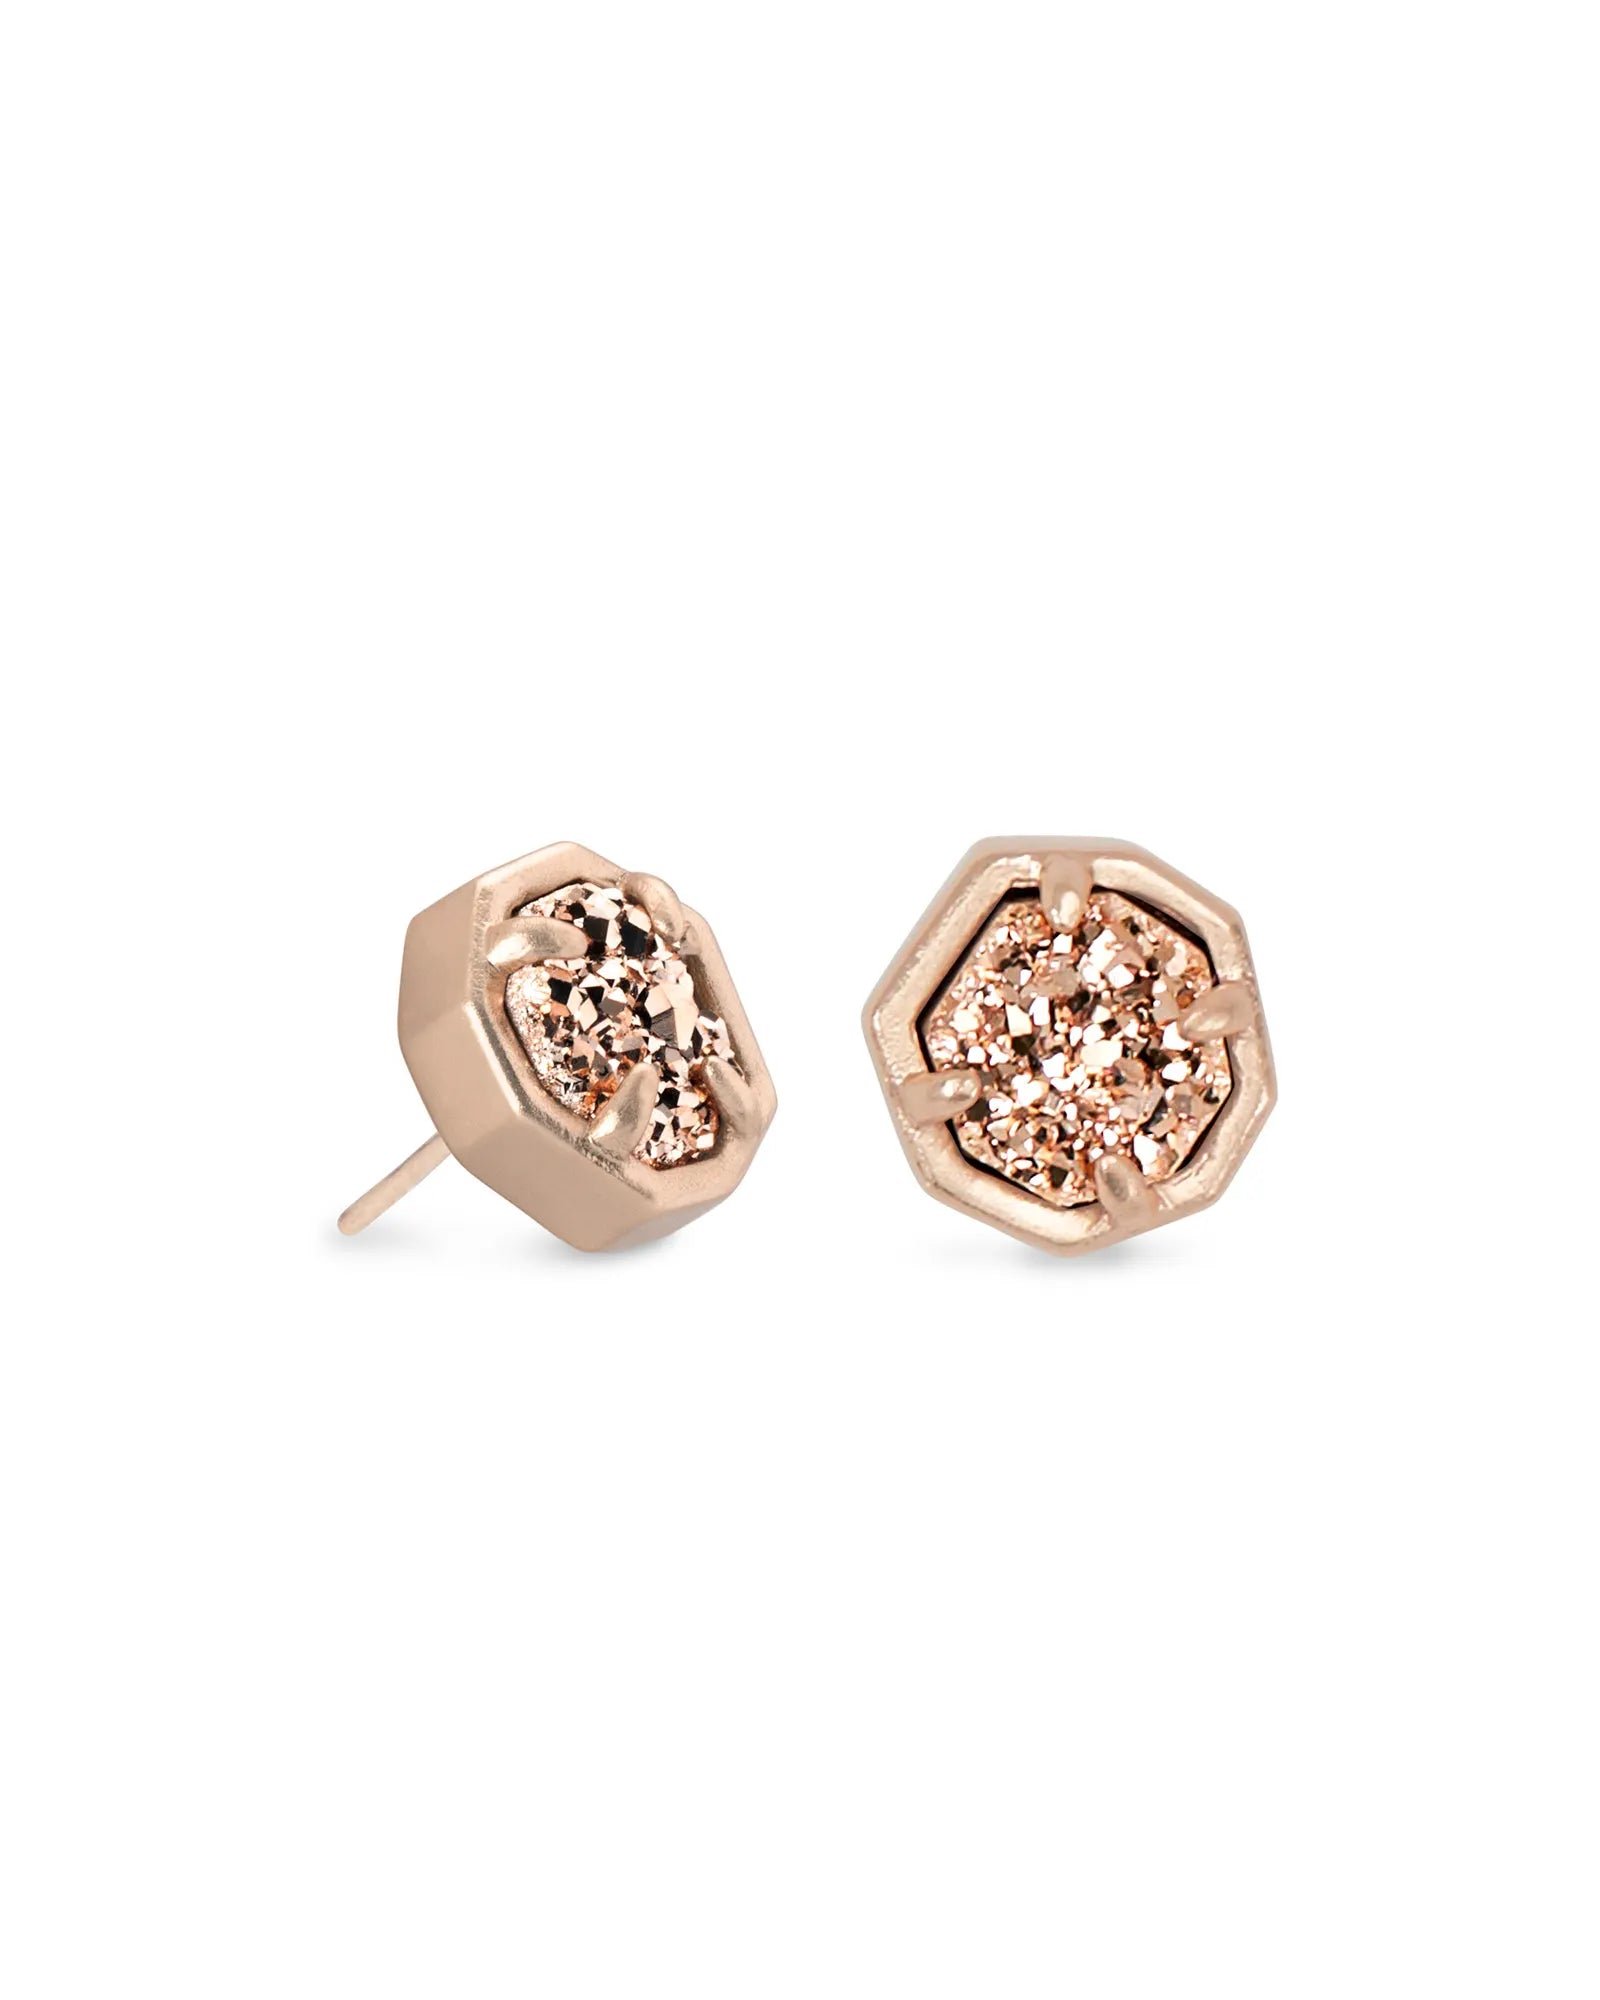 KENDRA SCOTT- Nola Stud Earrings in Rose Gold Iridescent Drusy